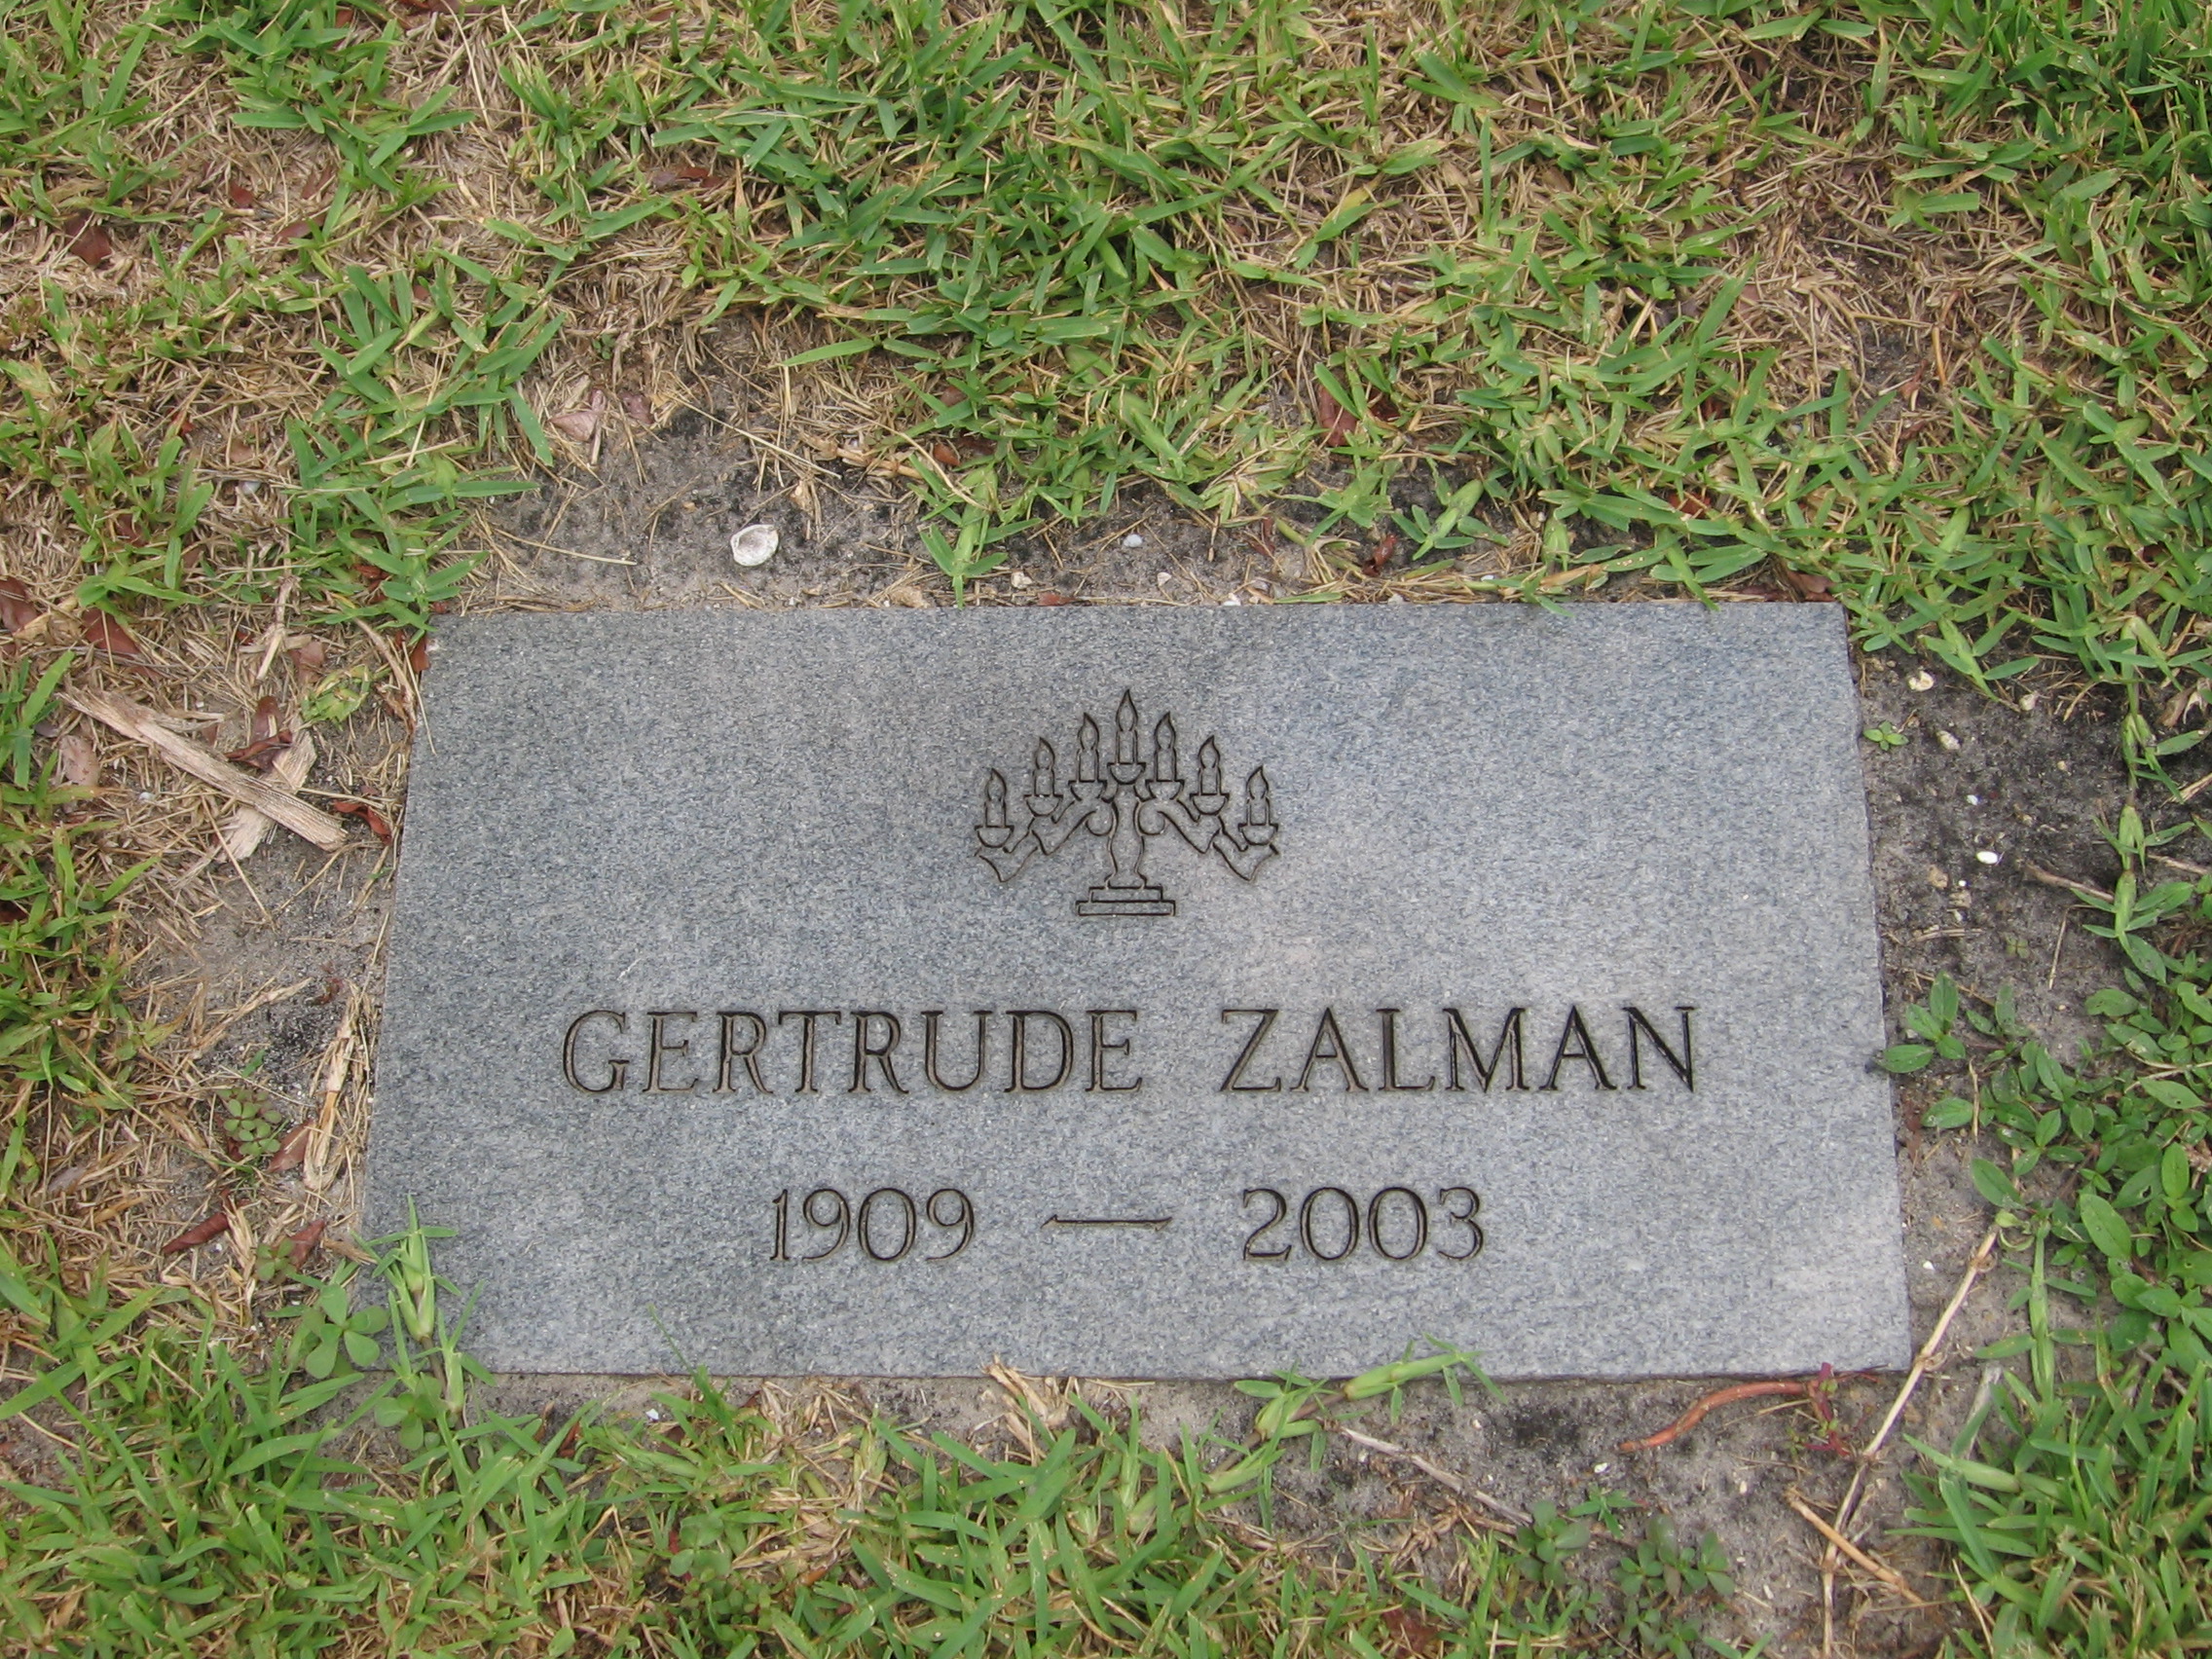 Gertrude Zalman